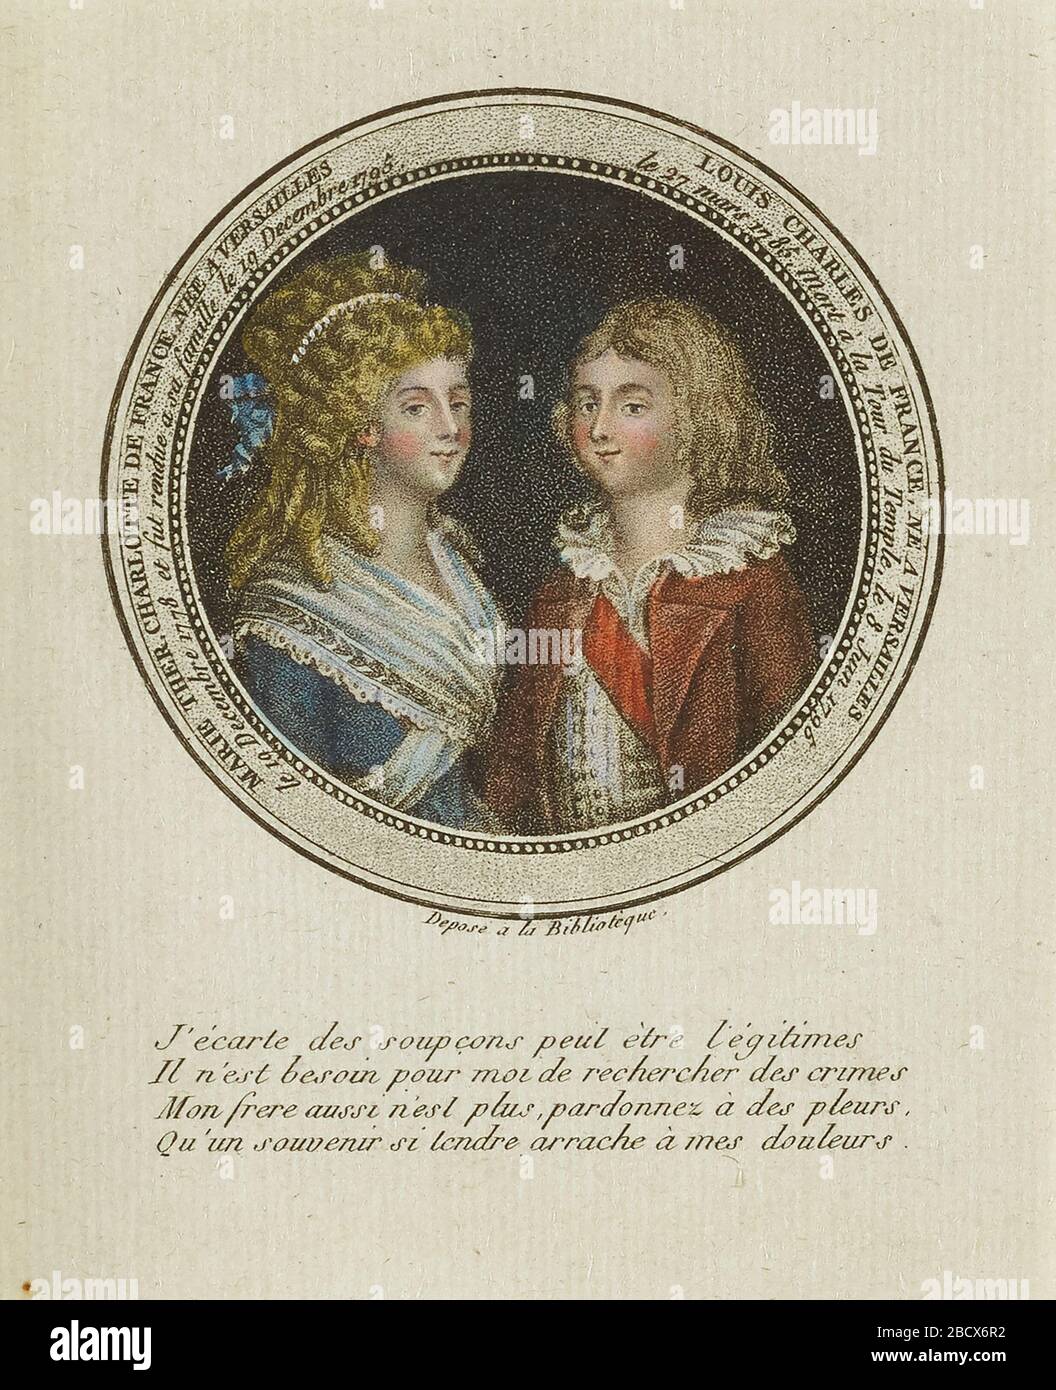 Maria Theresa Charlotte de France Louis Charles de France. Banque D'Images